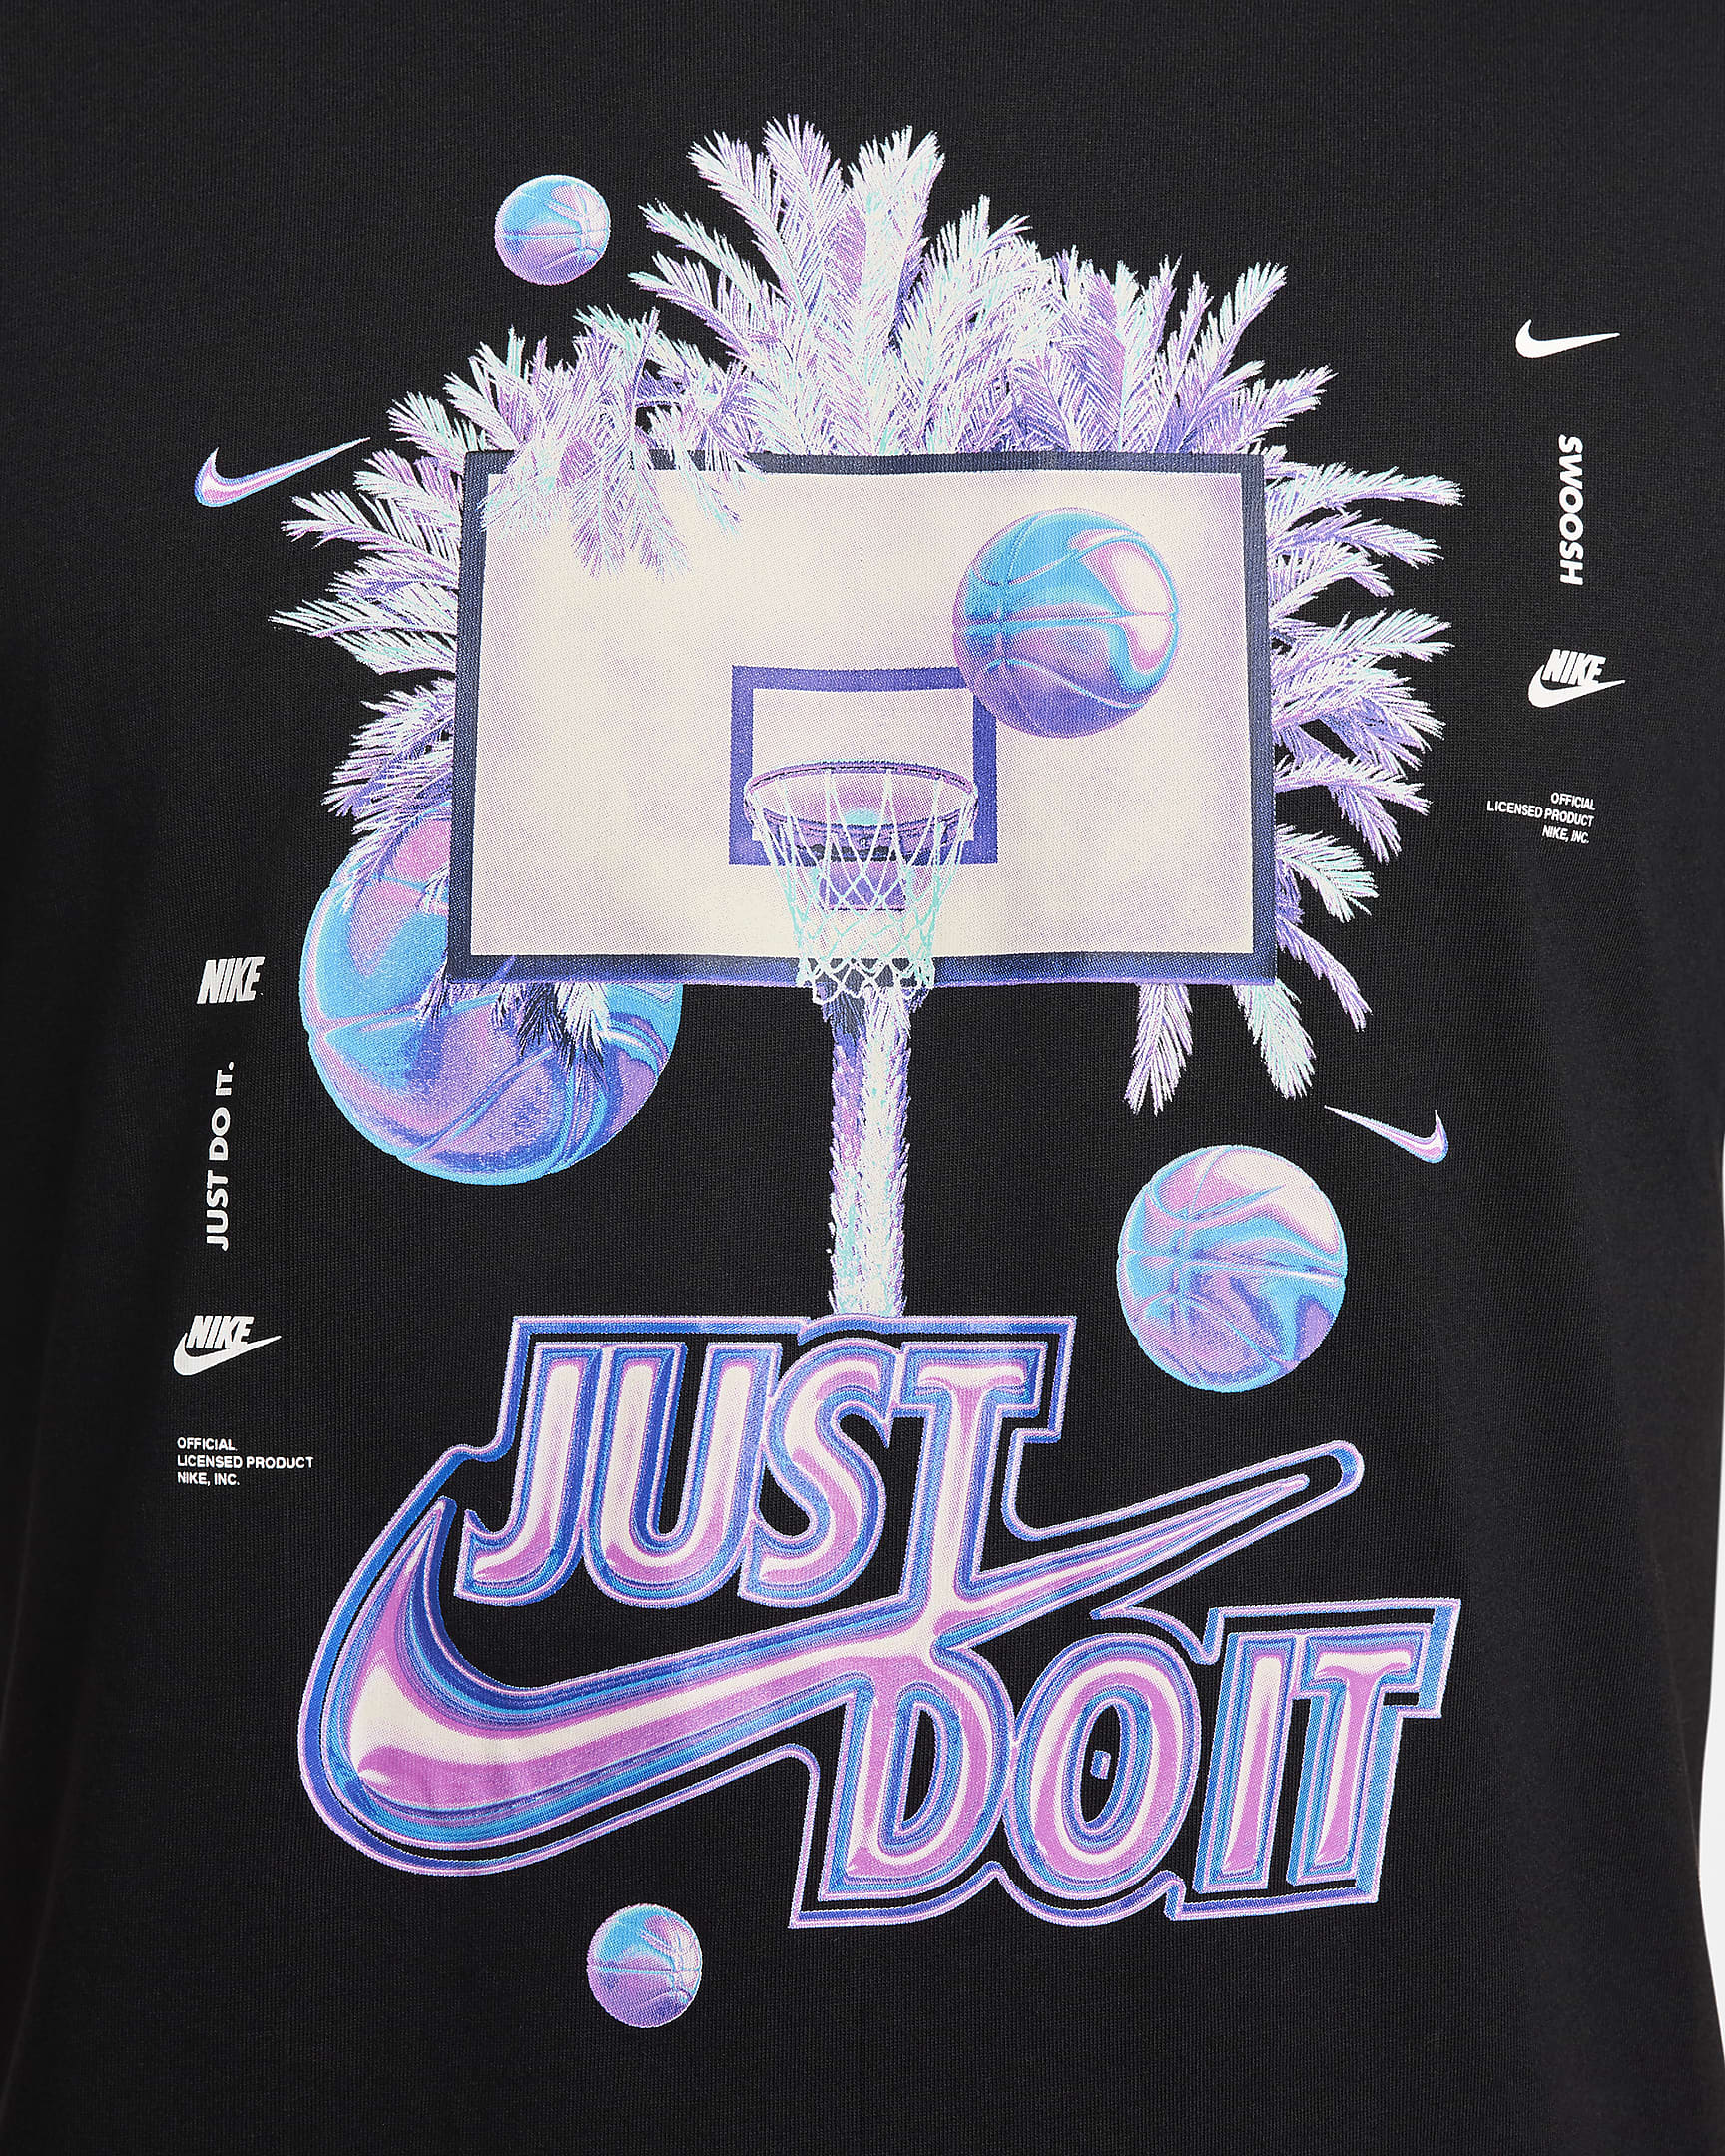 Nike Men's Basketball T-Shirt - Black